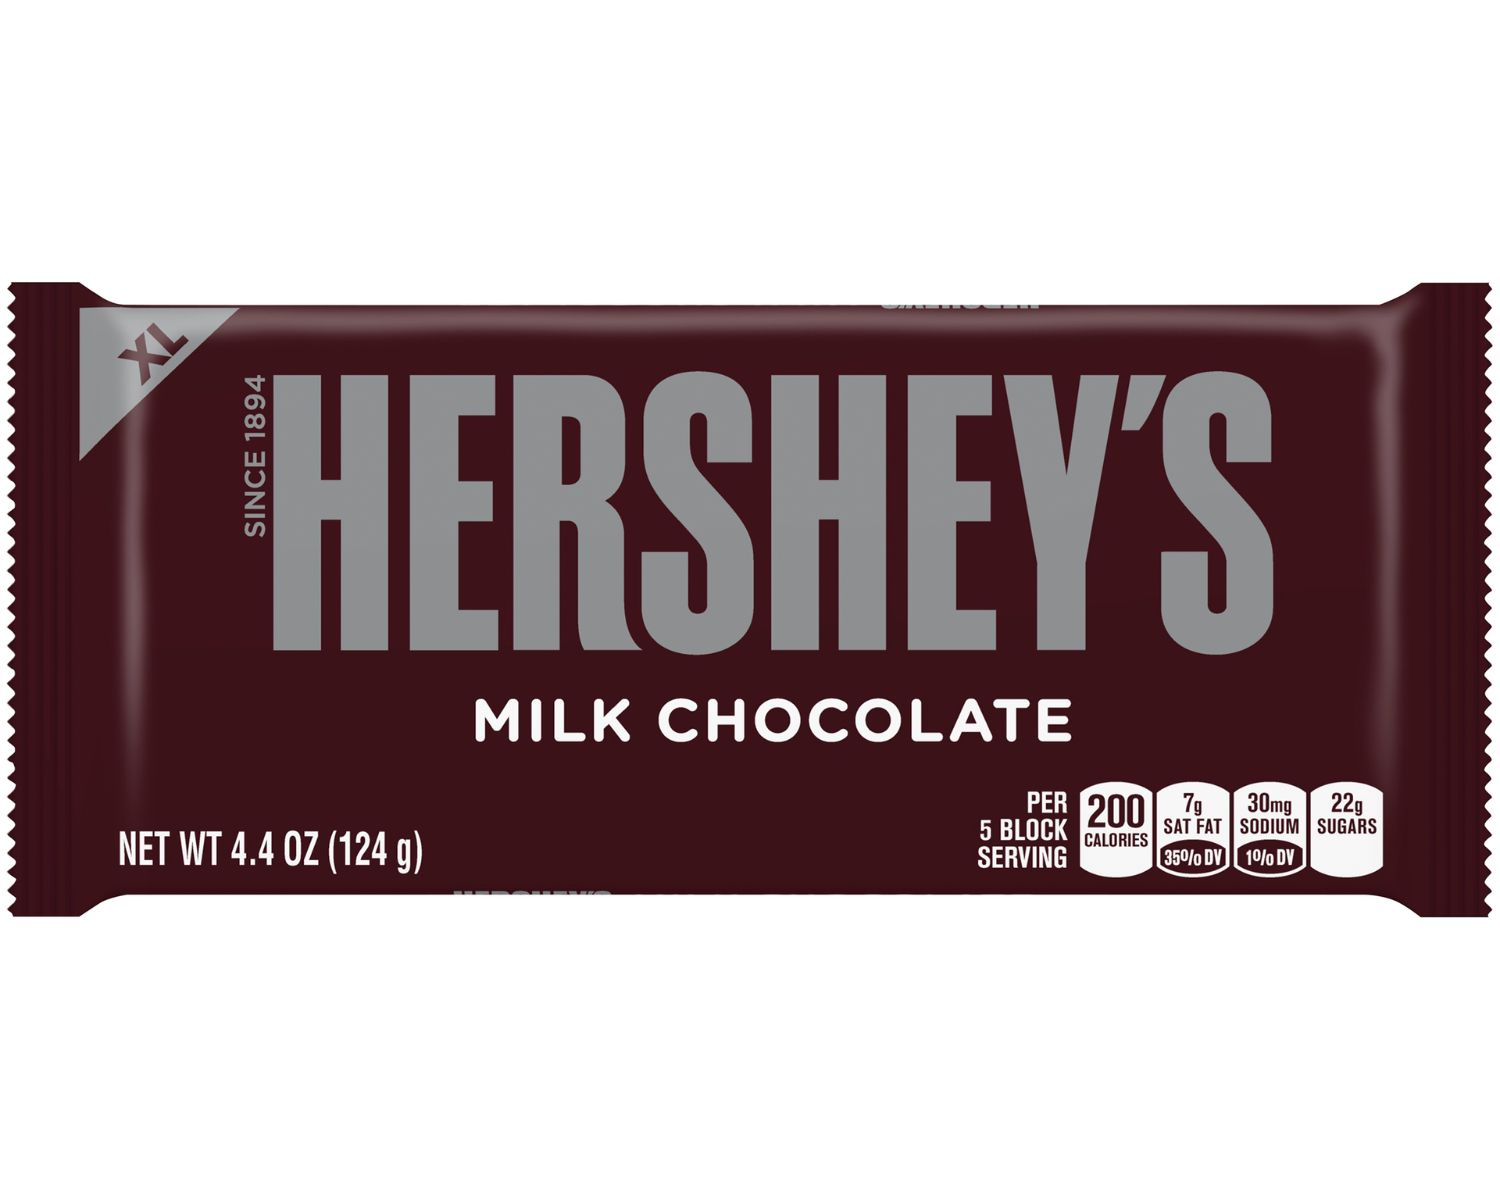 15-hershey-milk-chocolate-nutrition-facts